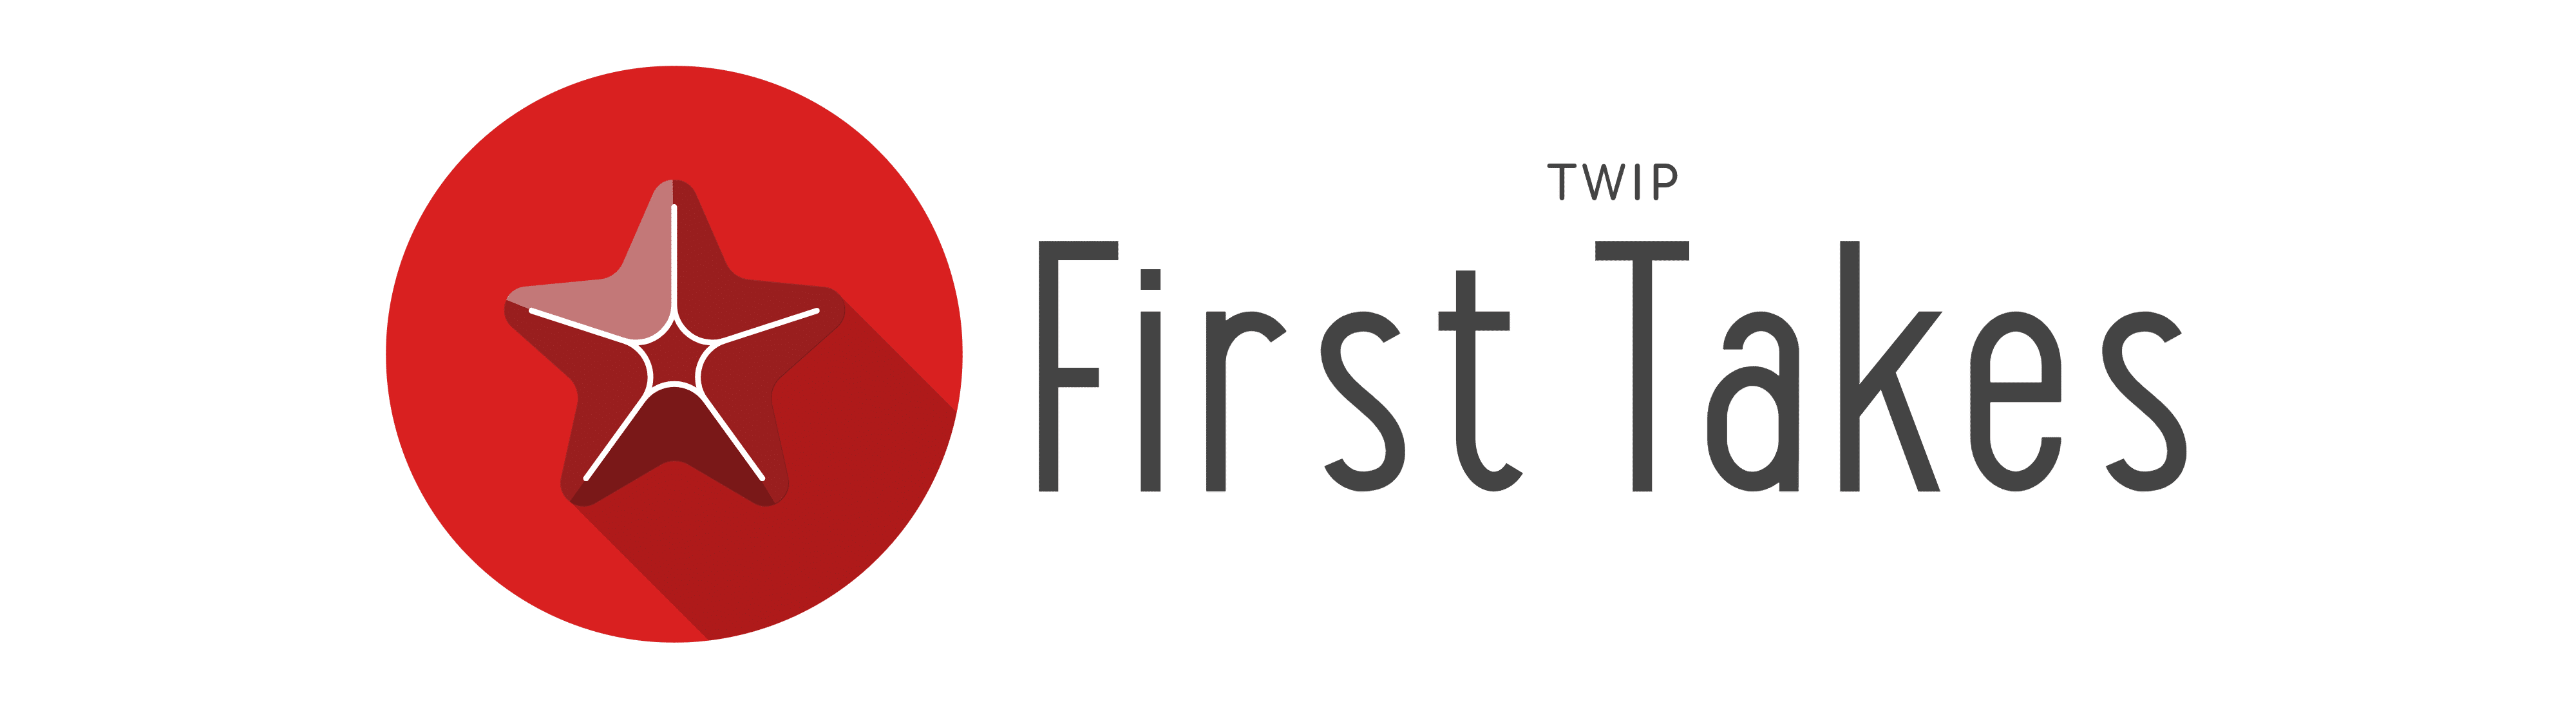 TWIP First Takes Logo